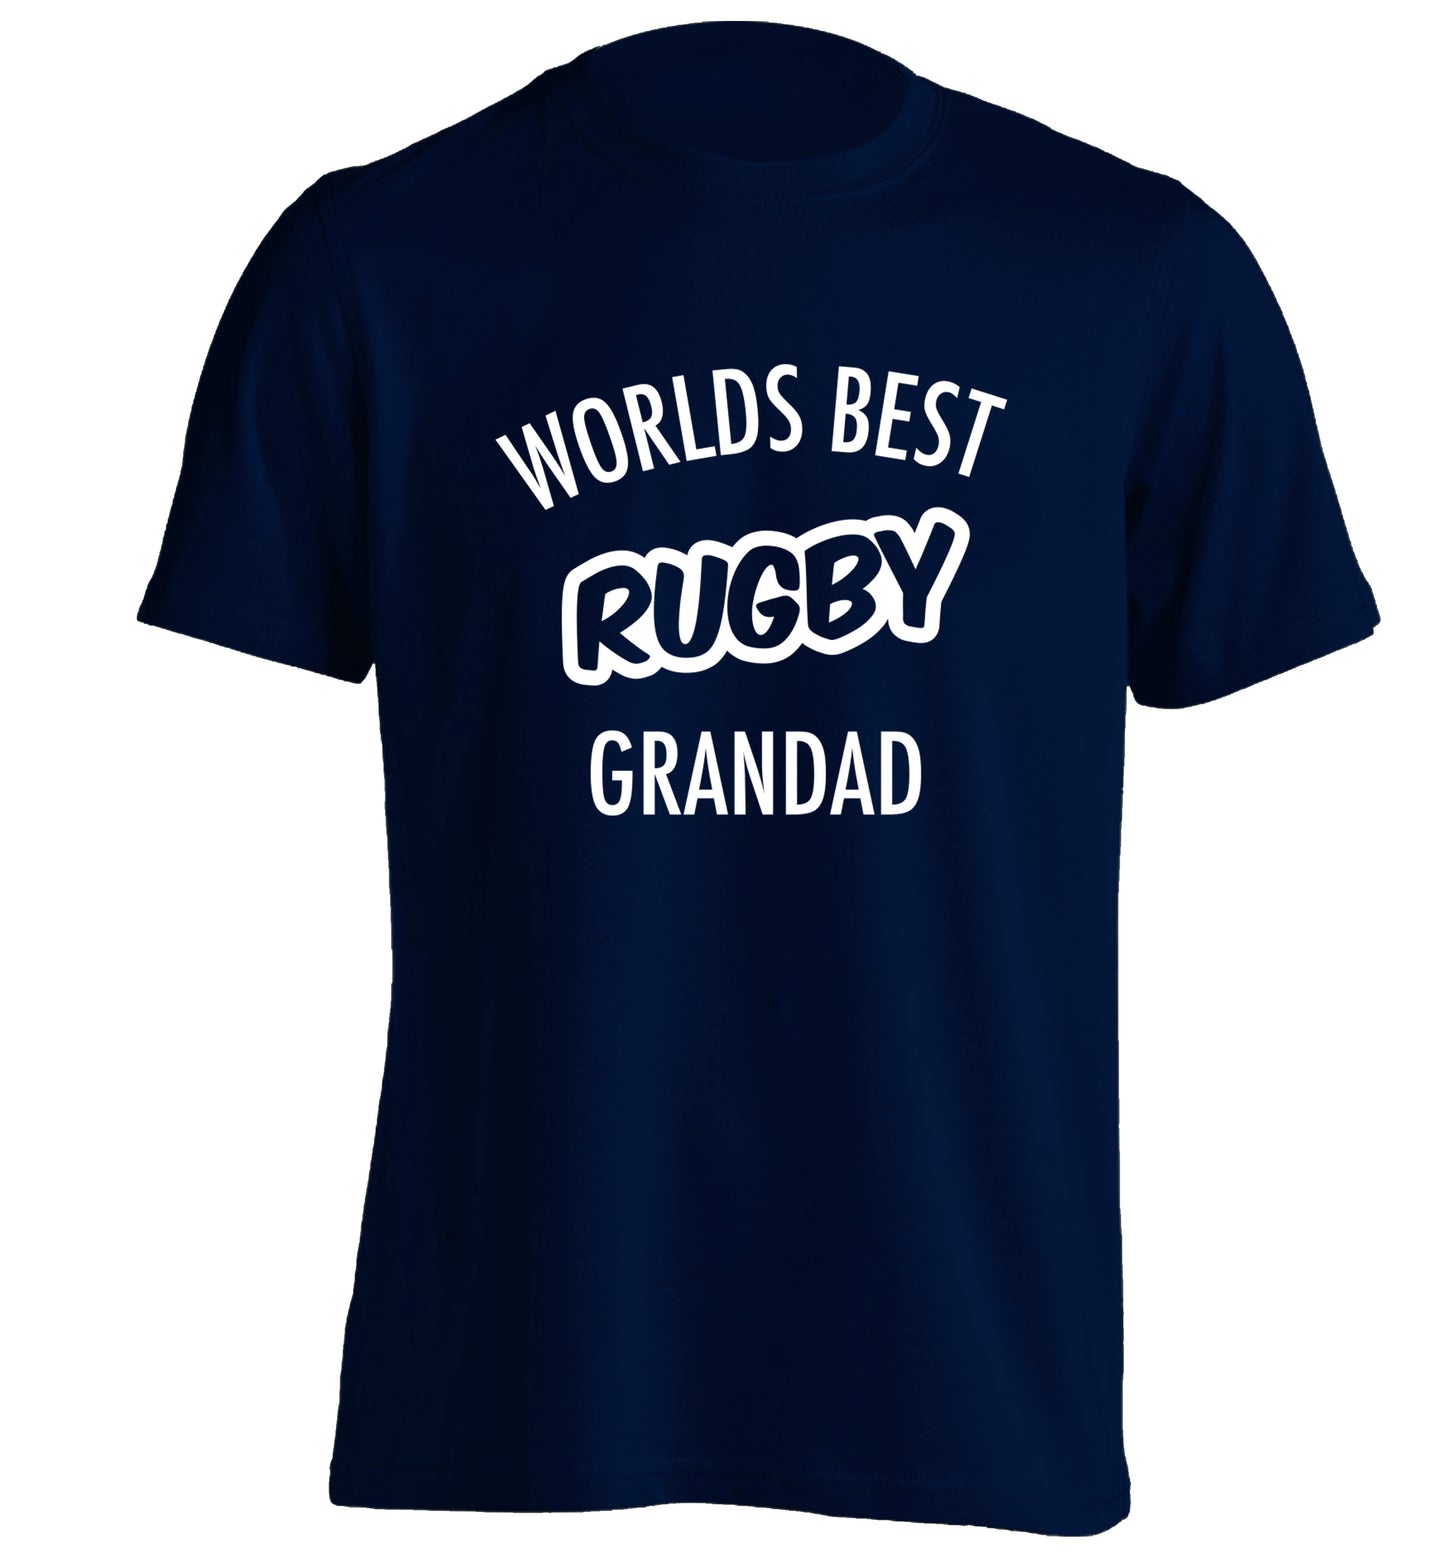 Worlds best rugby grandad adults unisex navy Tshirt 2XL